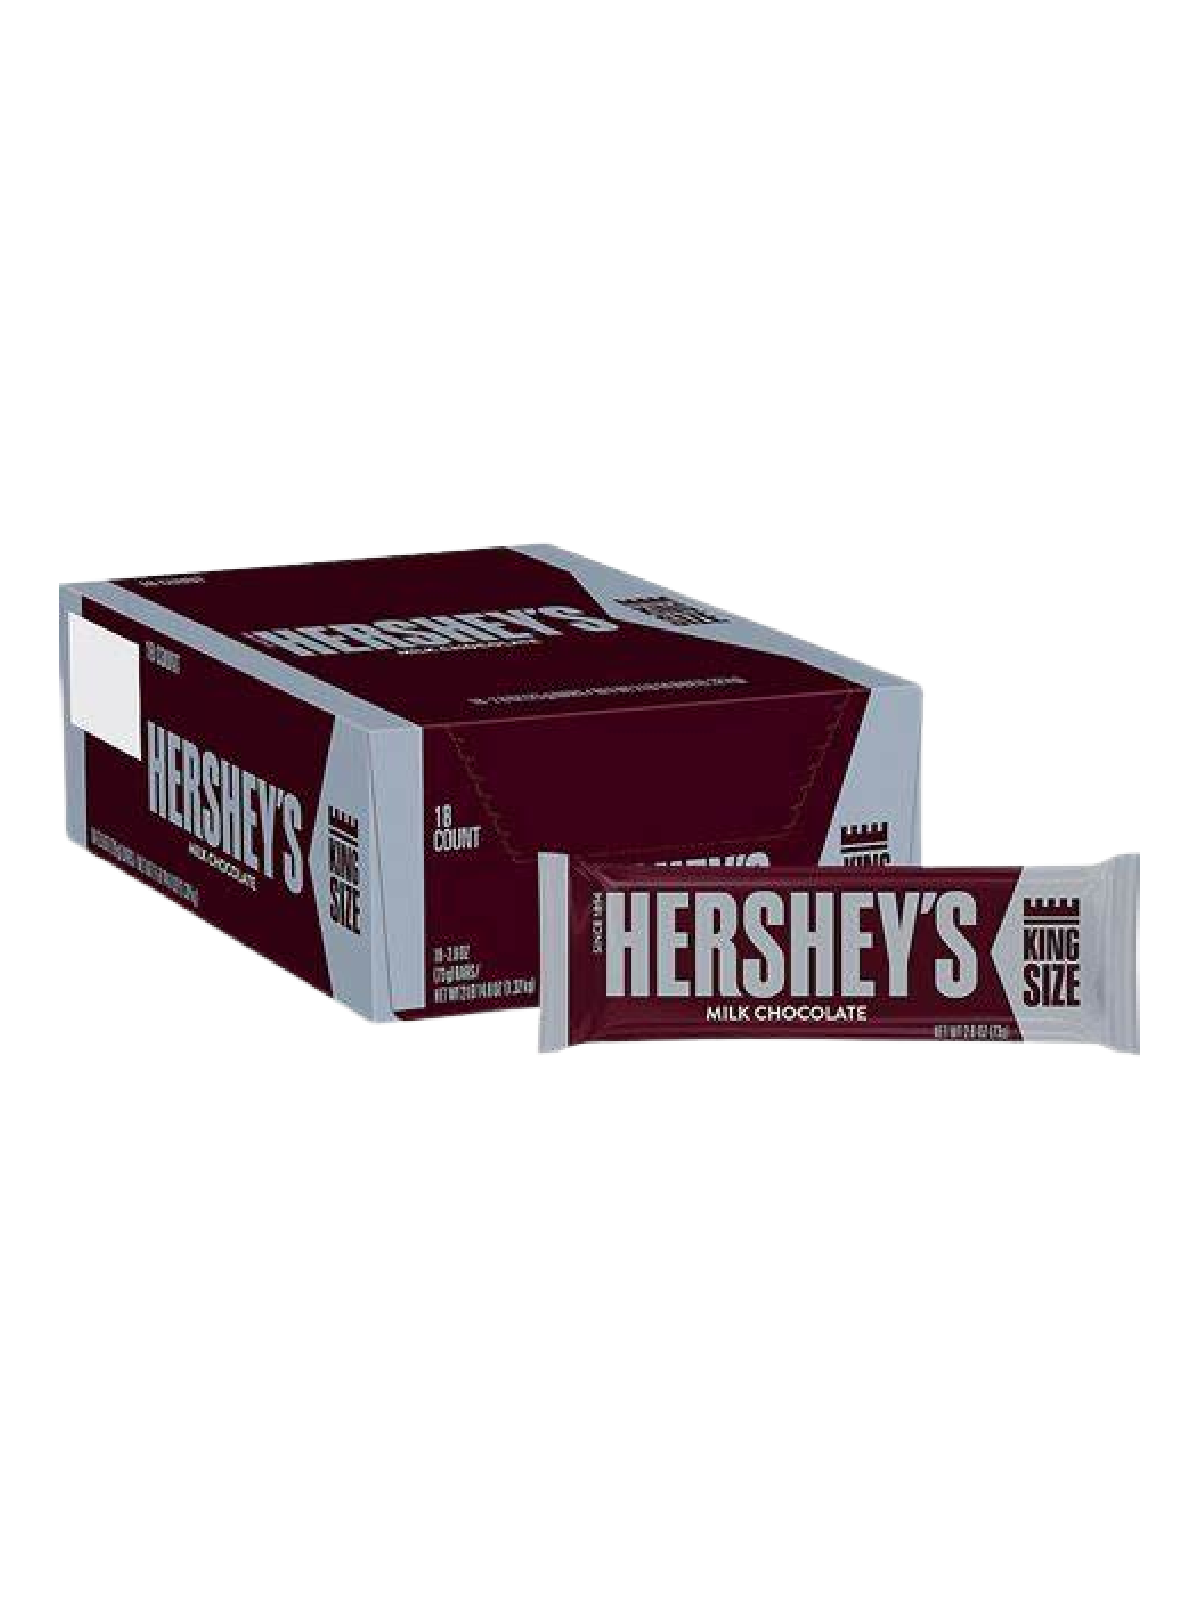 HERSHEY'S MILK CHOCOLATE KING SIZE 18 CT